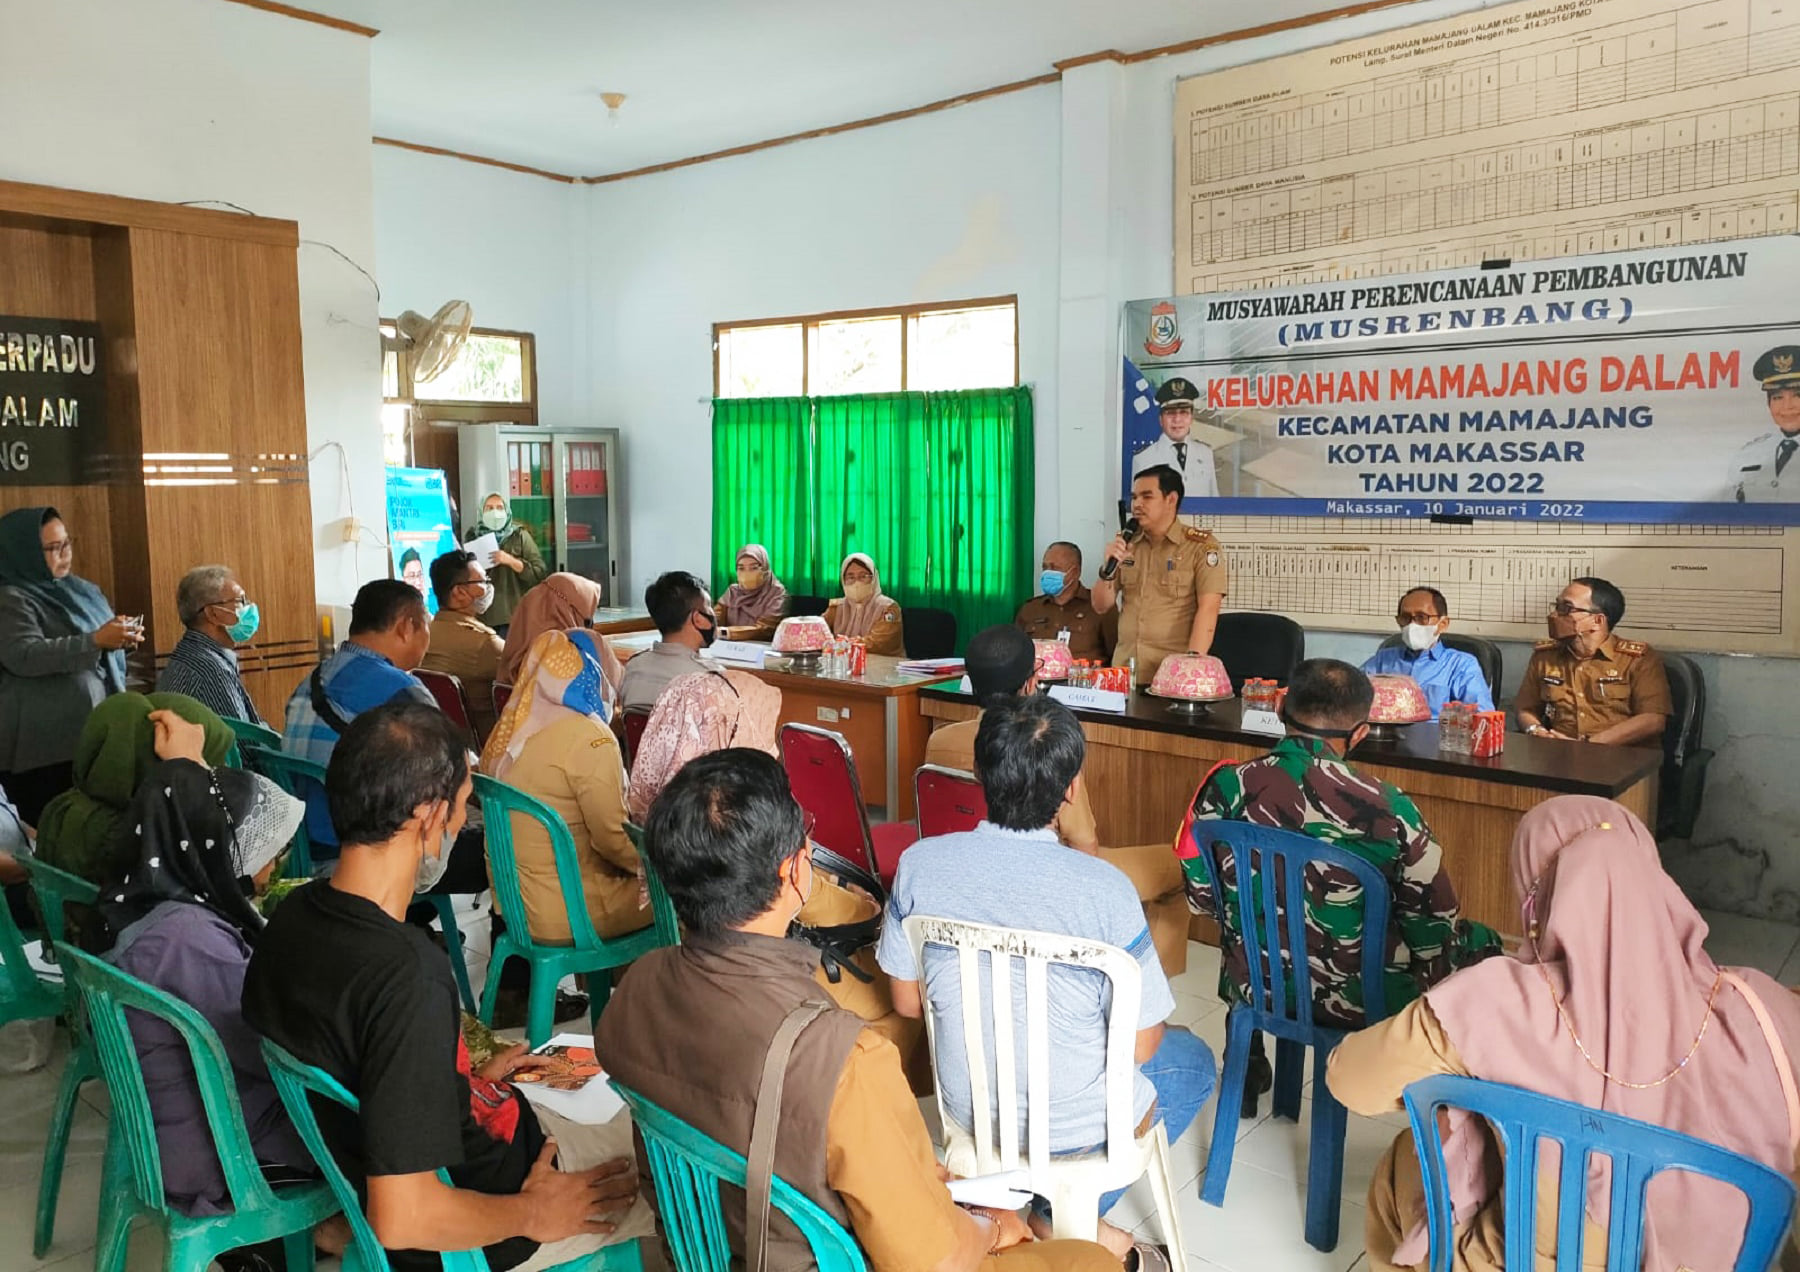 Gambar Plt Camat Mamajang M. Ari Fadli, S.STP membuka Kegiatan Musyawarah Perencanaan Pembangunan (MUSRENBANG) Tingkat Kelurahan Mamajang Dalam